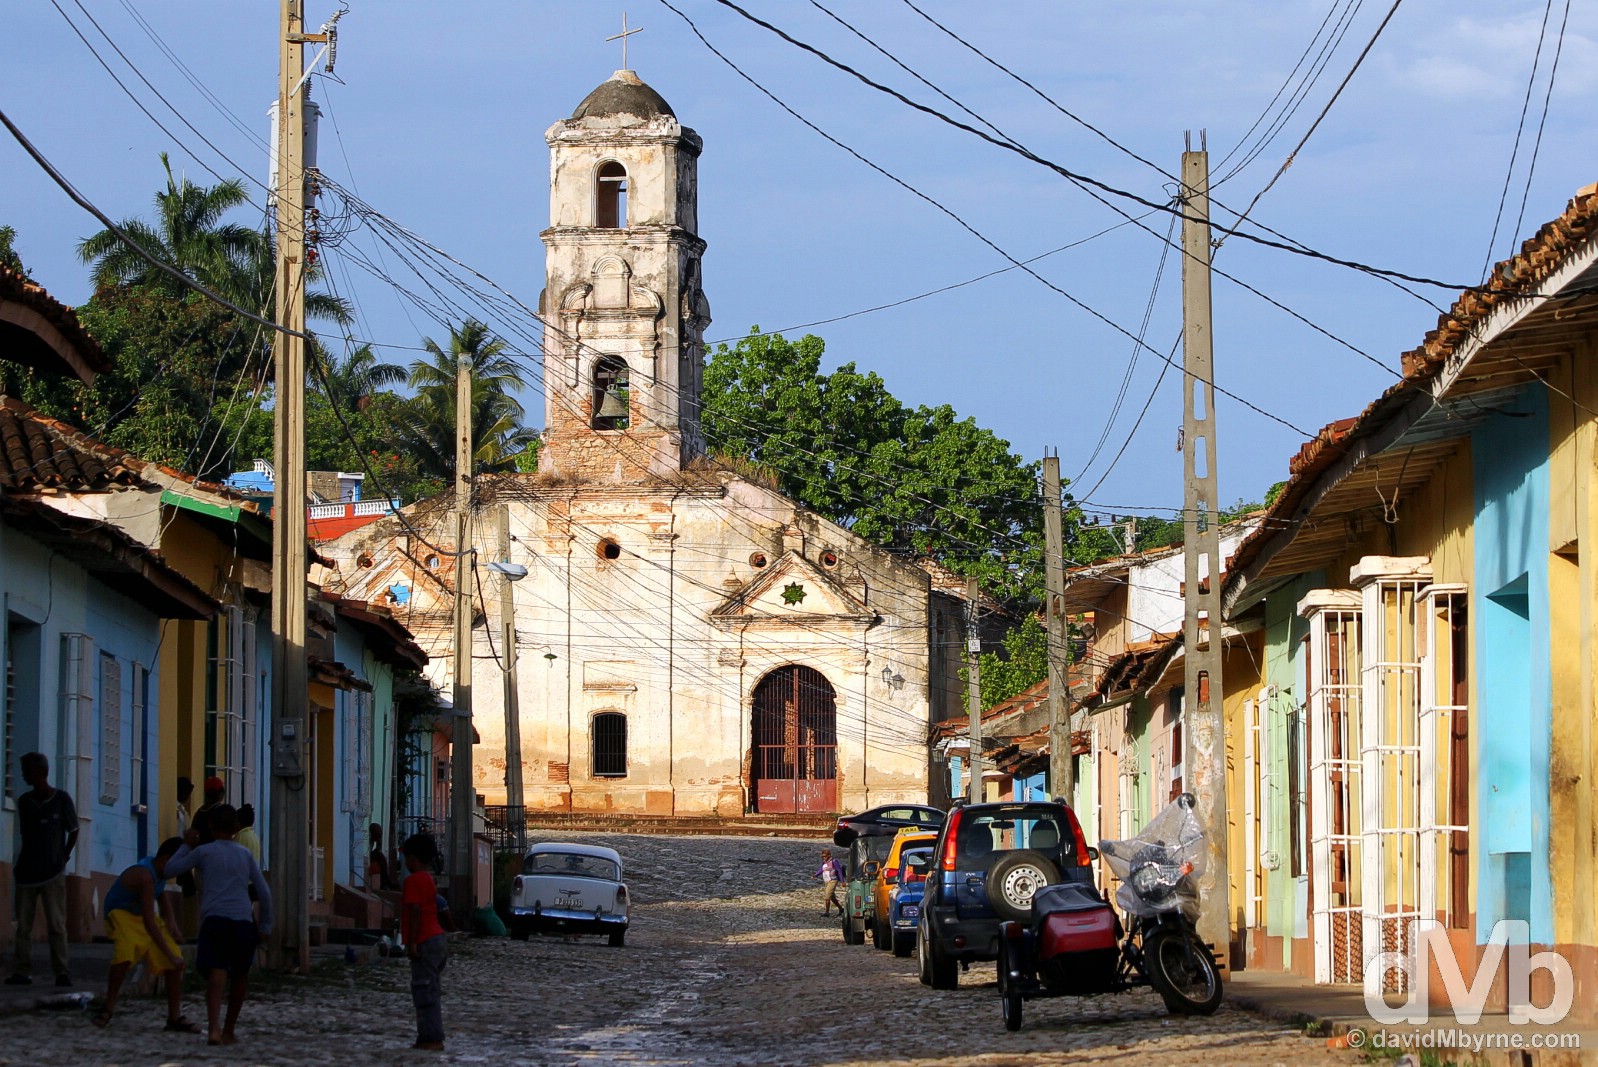 Iglesia de Santa Ana, Trinidad, Cuba. May 5, 2015.